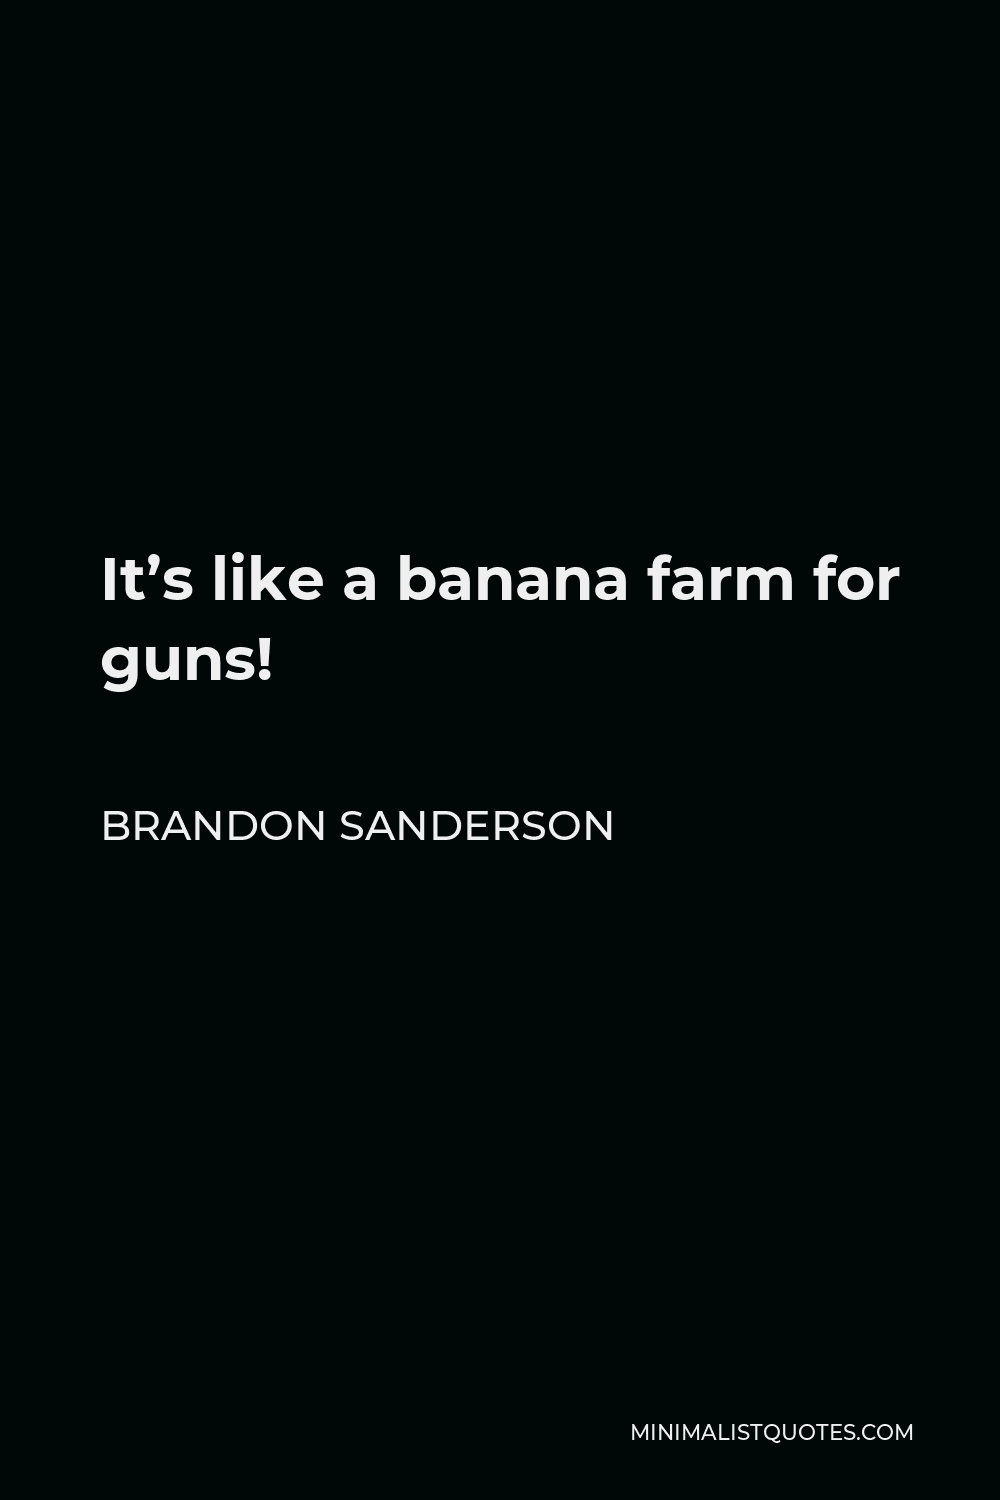 Brandon Sanderson Quote - It’s like a banana farm for guns!